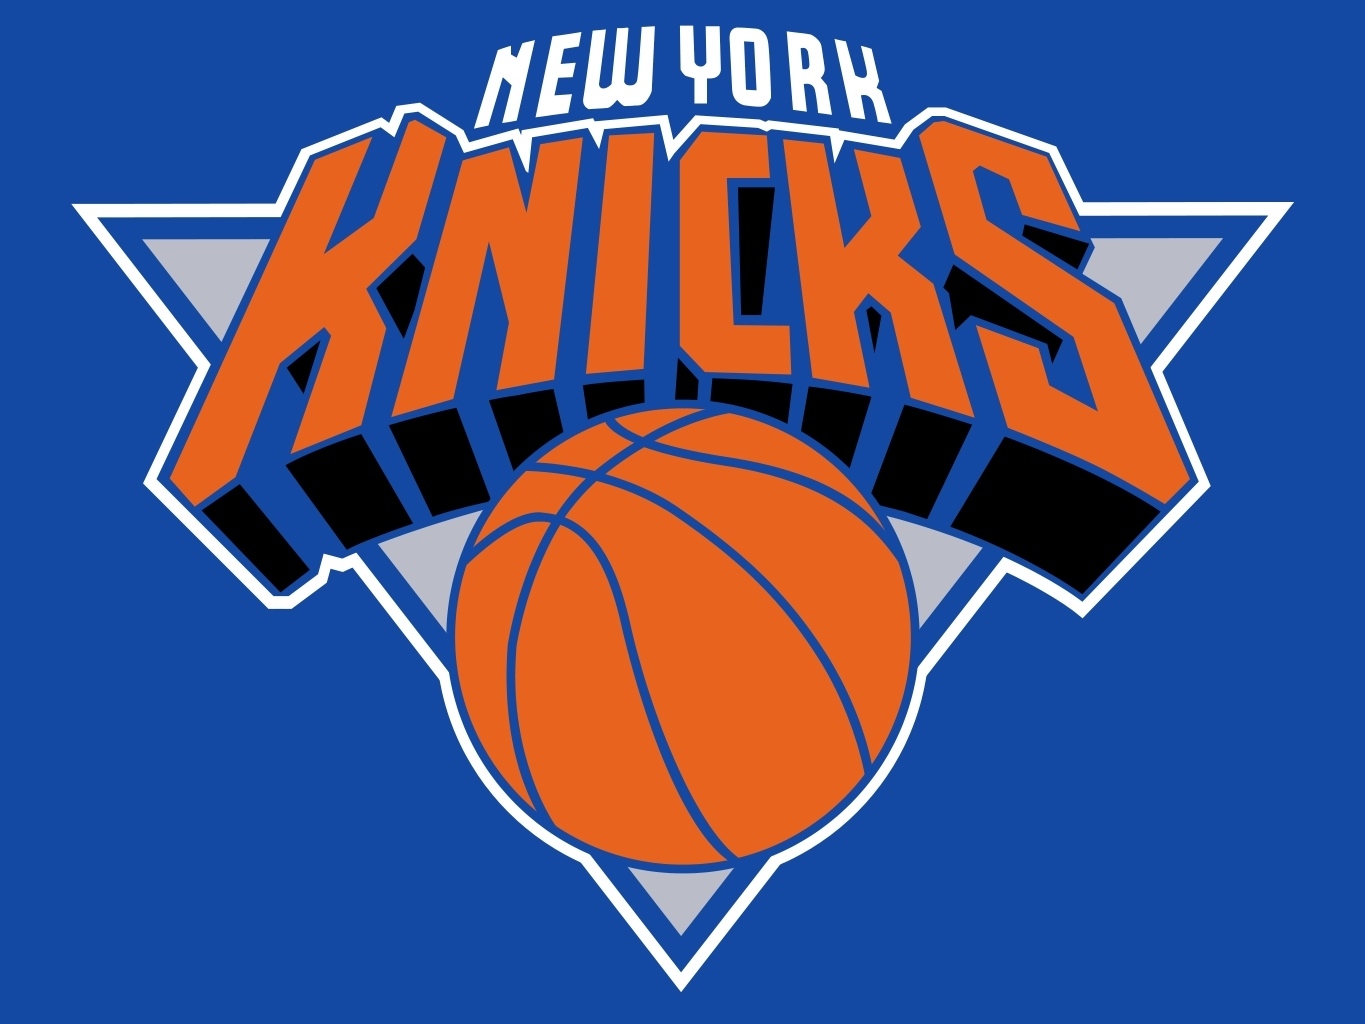 NY Knicks Wallpaper or